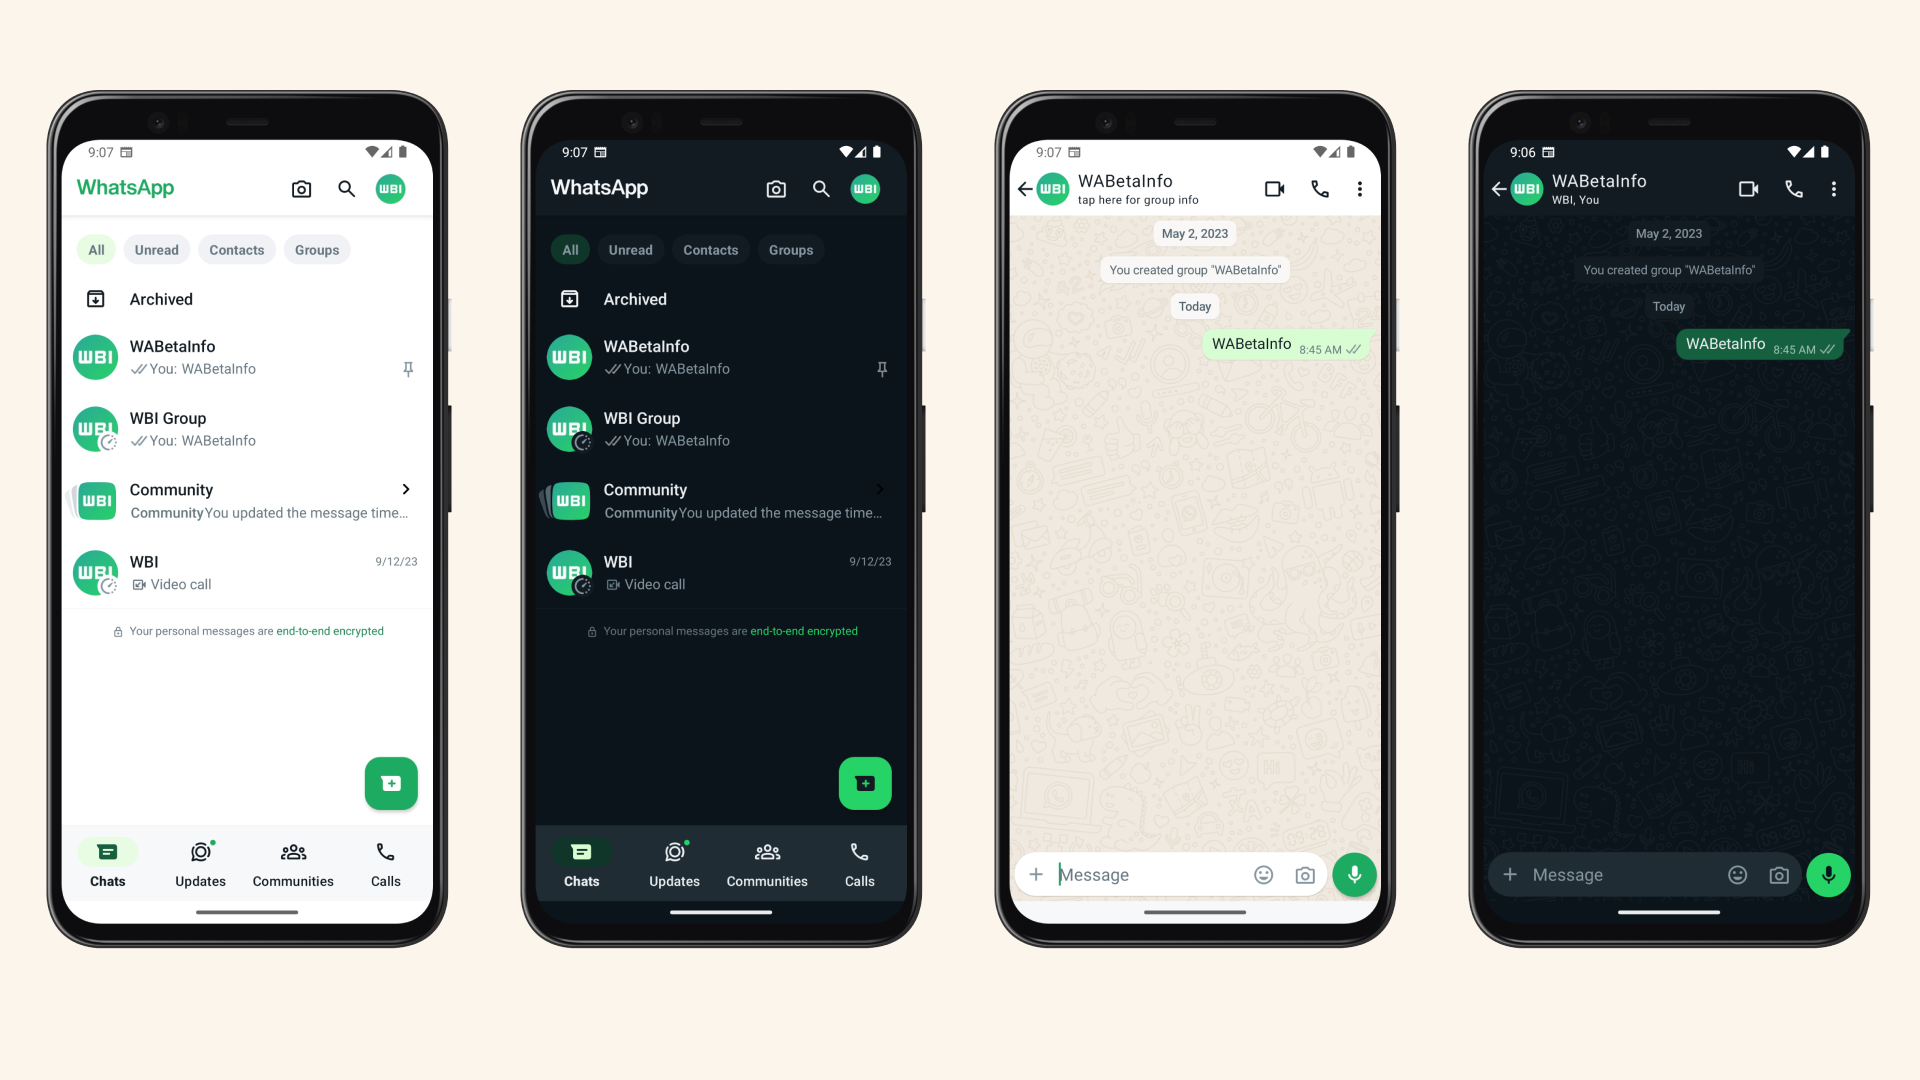 Suposta nova interface do WhatsApp